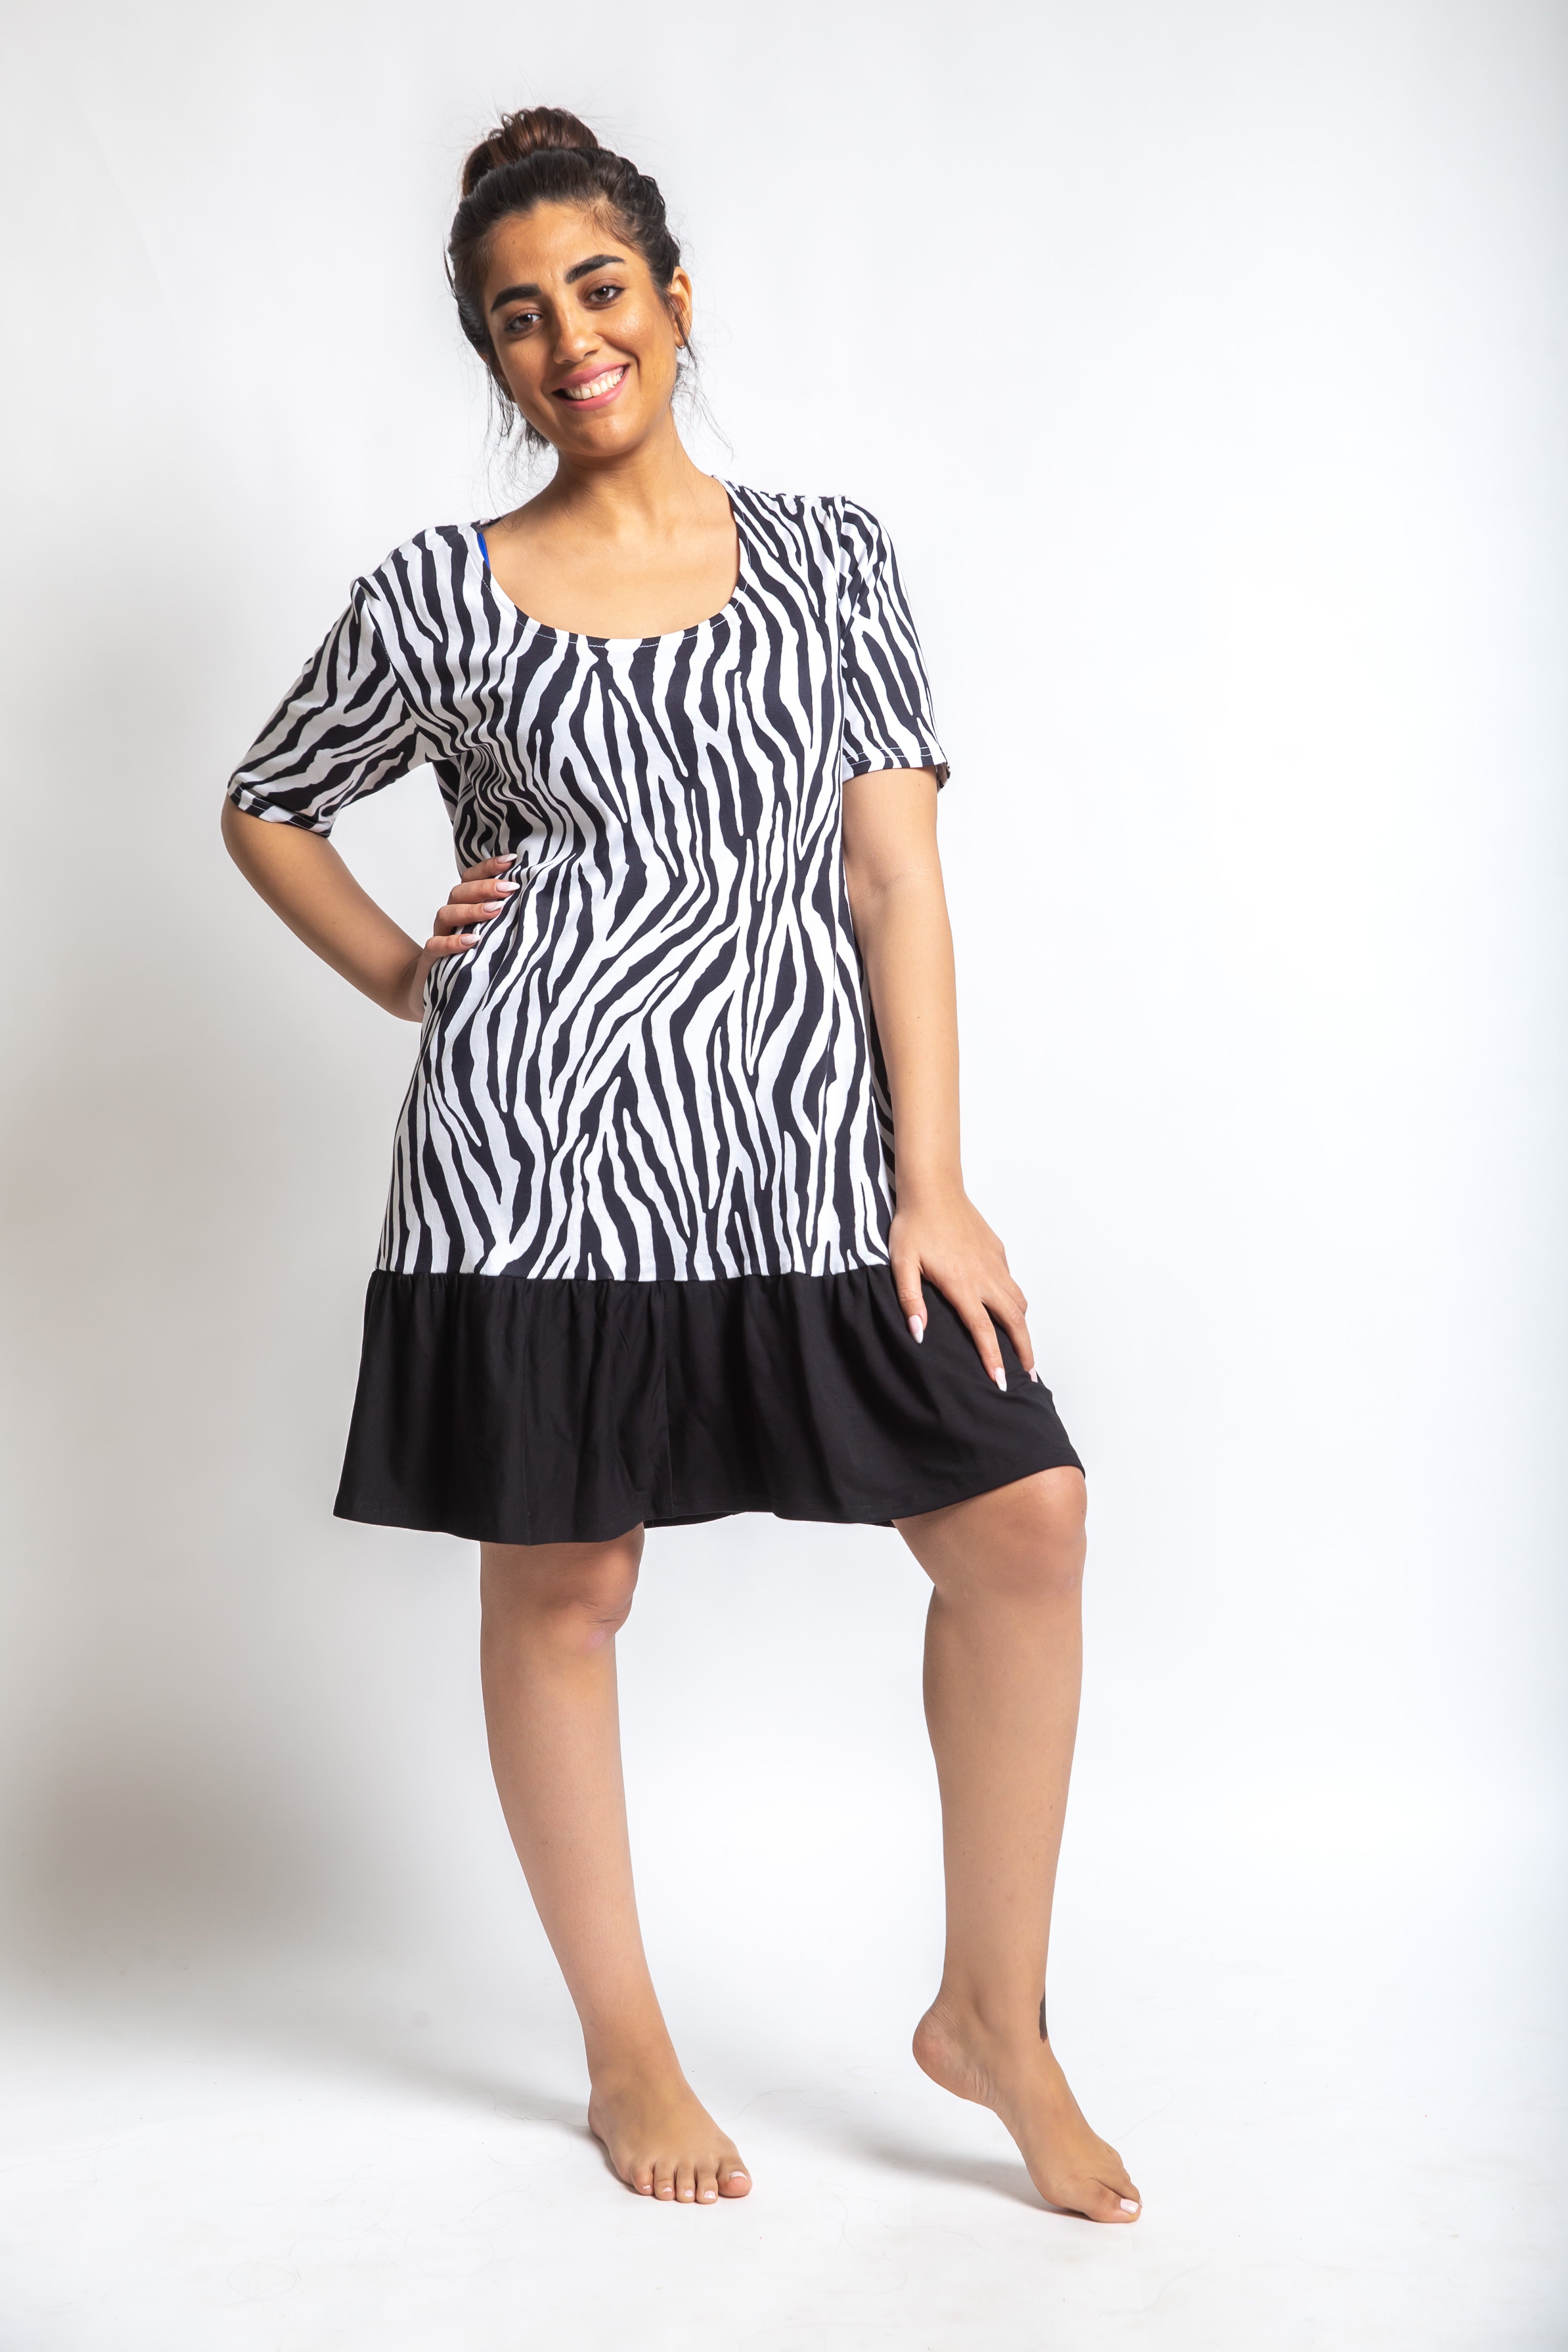 The Ruffled Zebra Print Dress